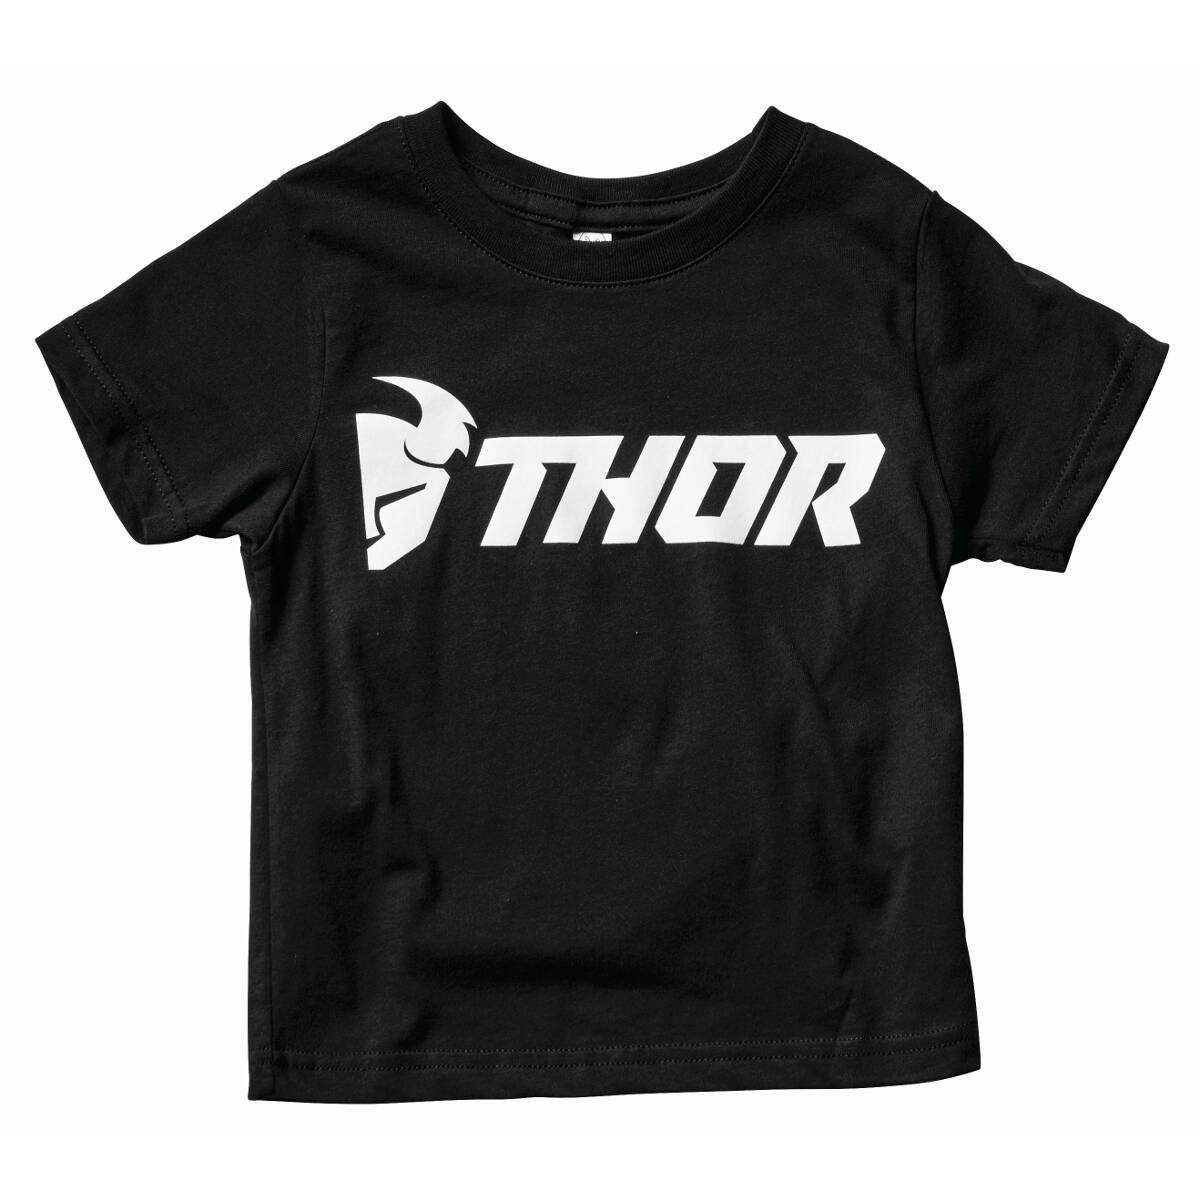 Thor Bimbo T-Shirt Loud Black